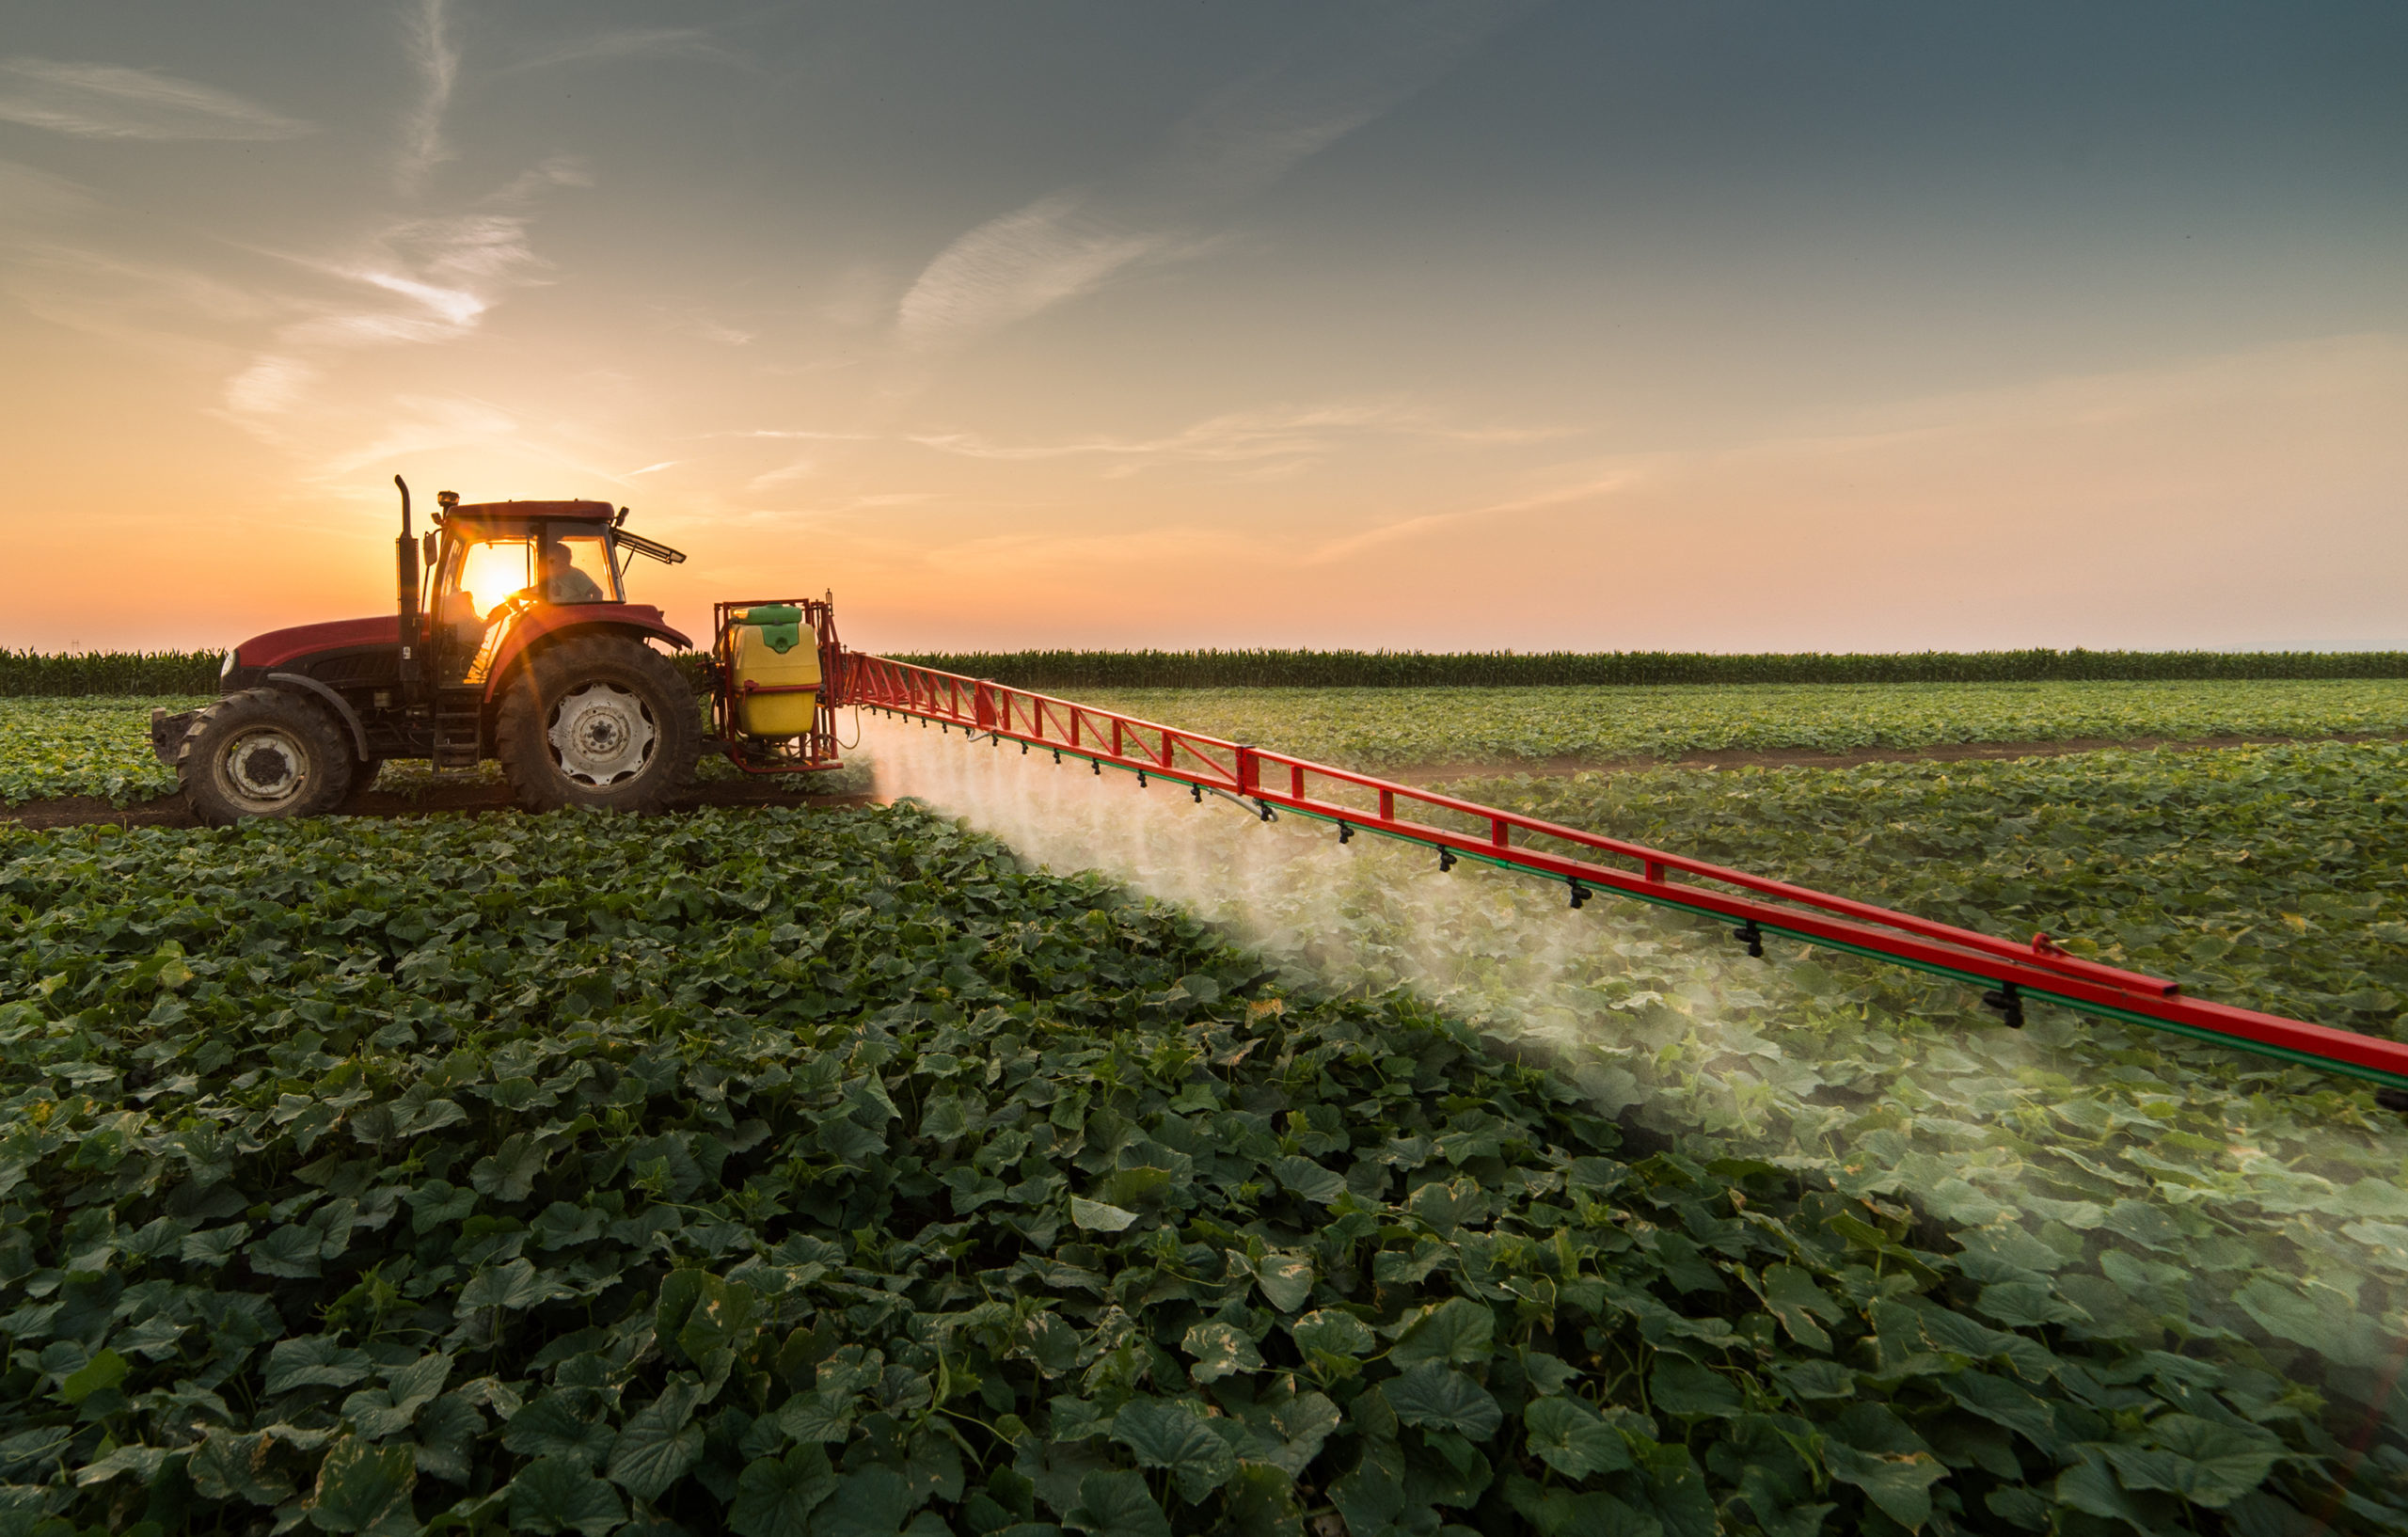 Agricultural fertilizer and pesticide applications